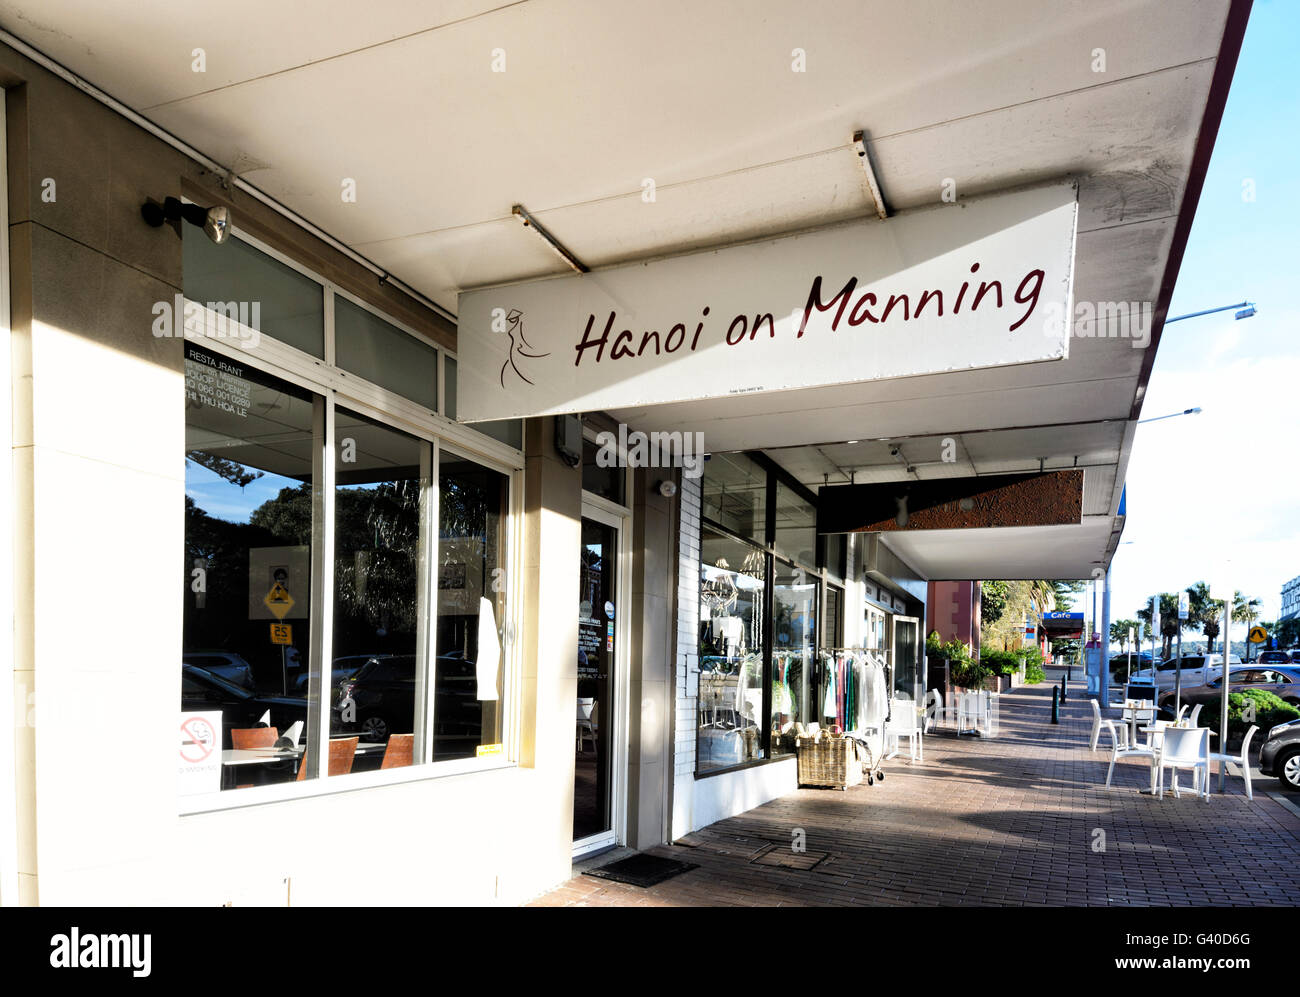 Vietnamese Restaurant Hanoi on Manning, Kiama, Illawarra Coast, New South Wales, NSW, Australia Stock Photo